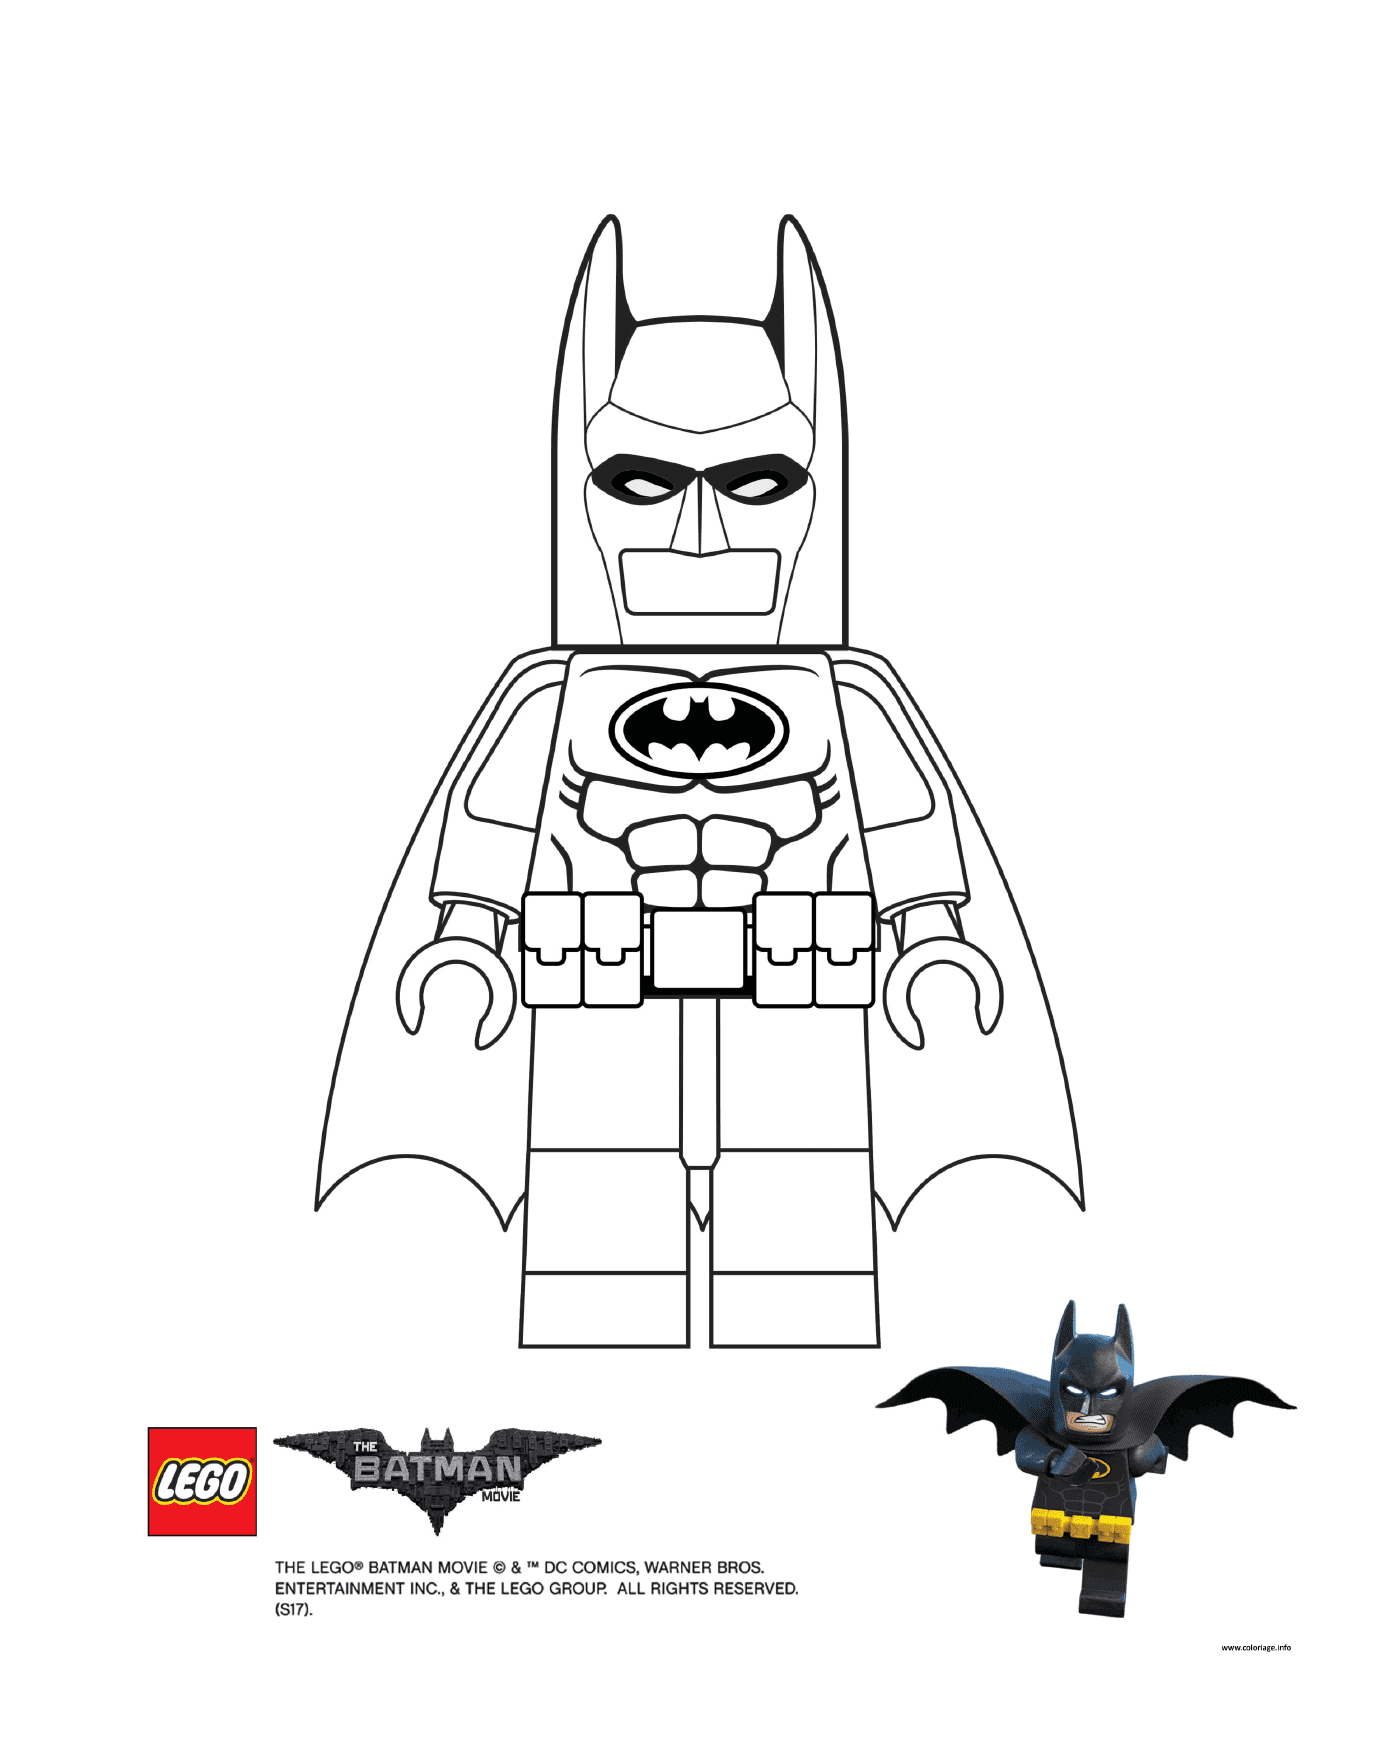  Batman Lego, a character for children 